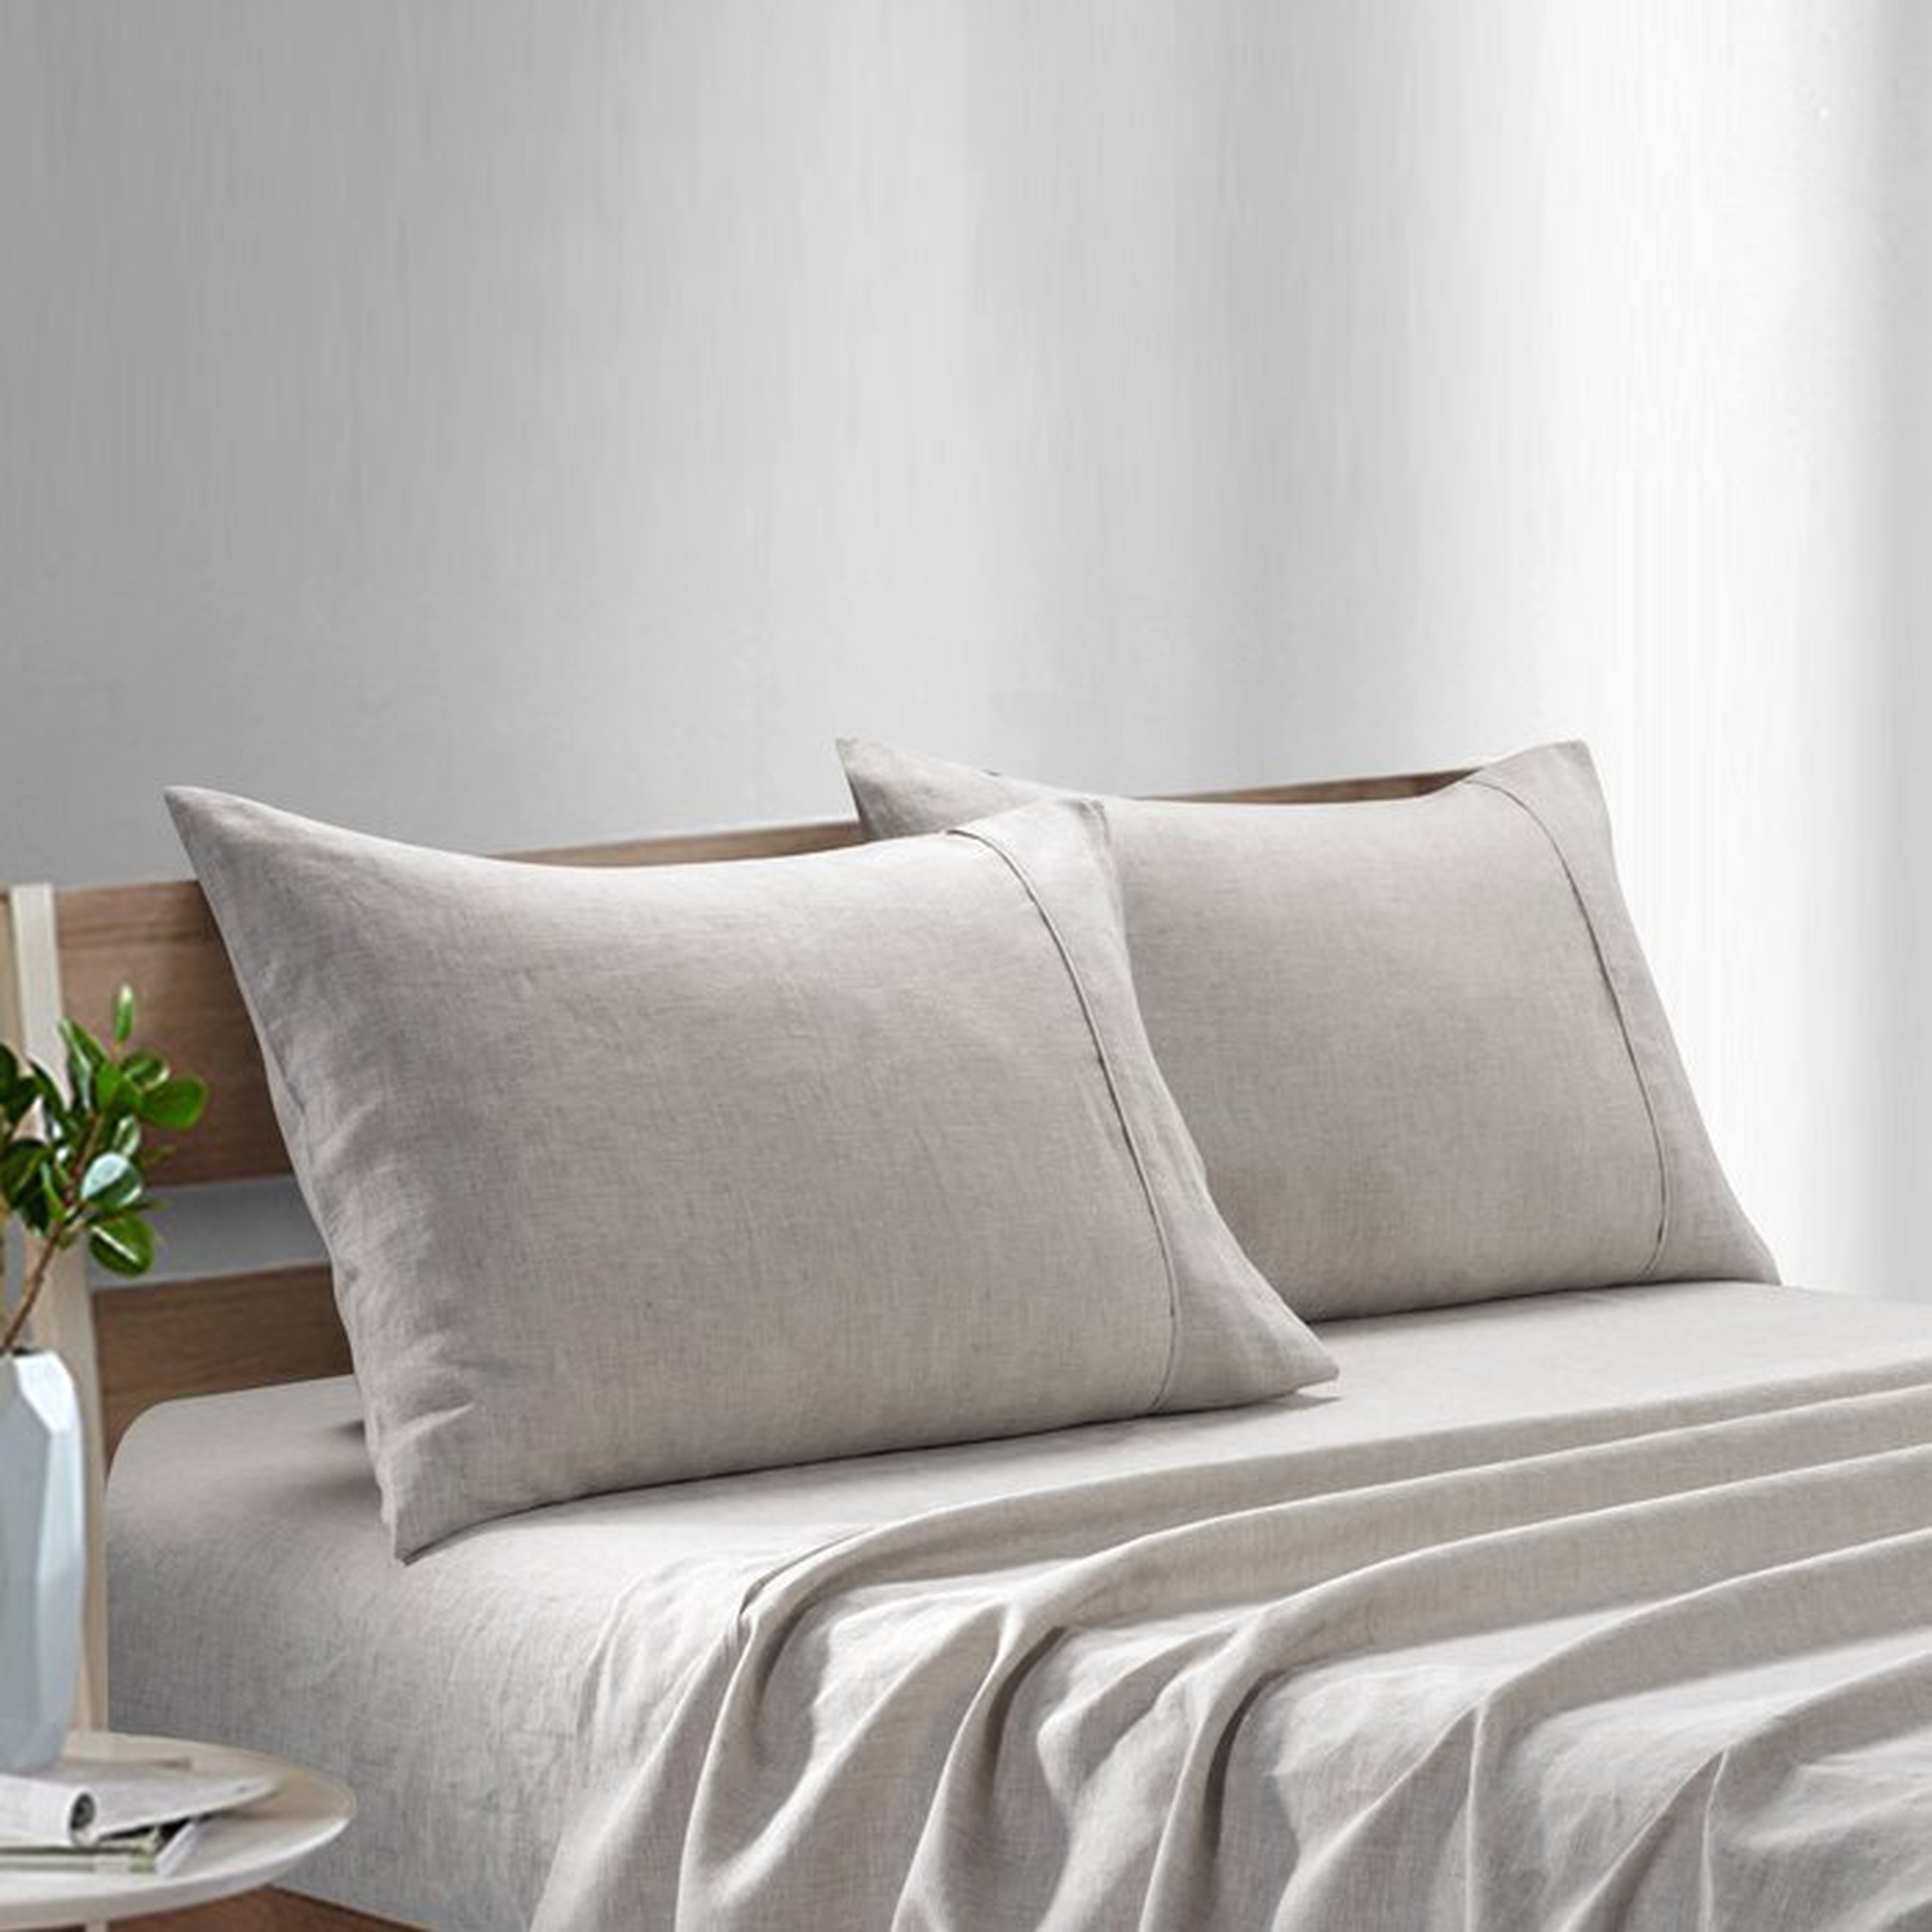 Aila-May Stone Washed Linen Pillowcase (Set of 2) - Wayfair